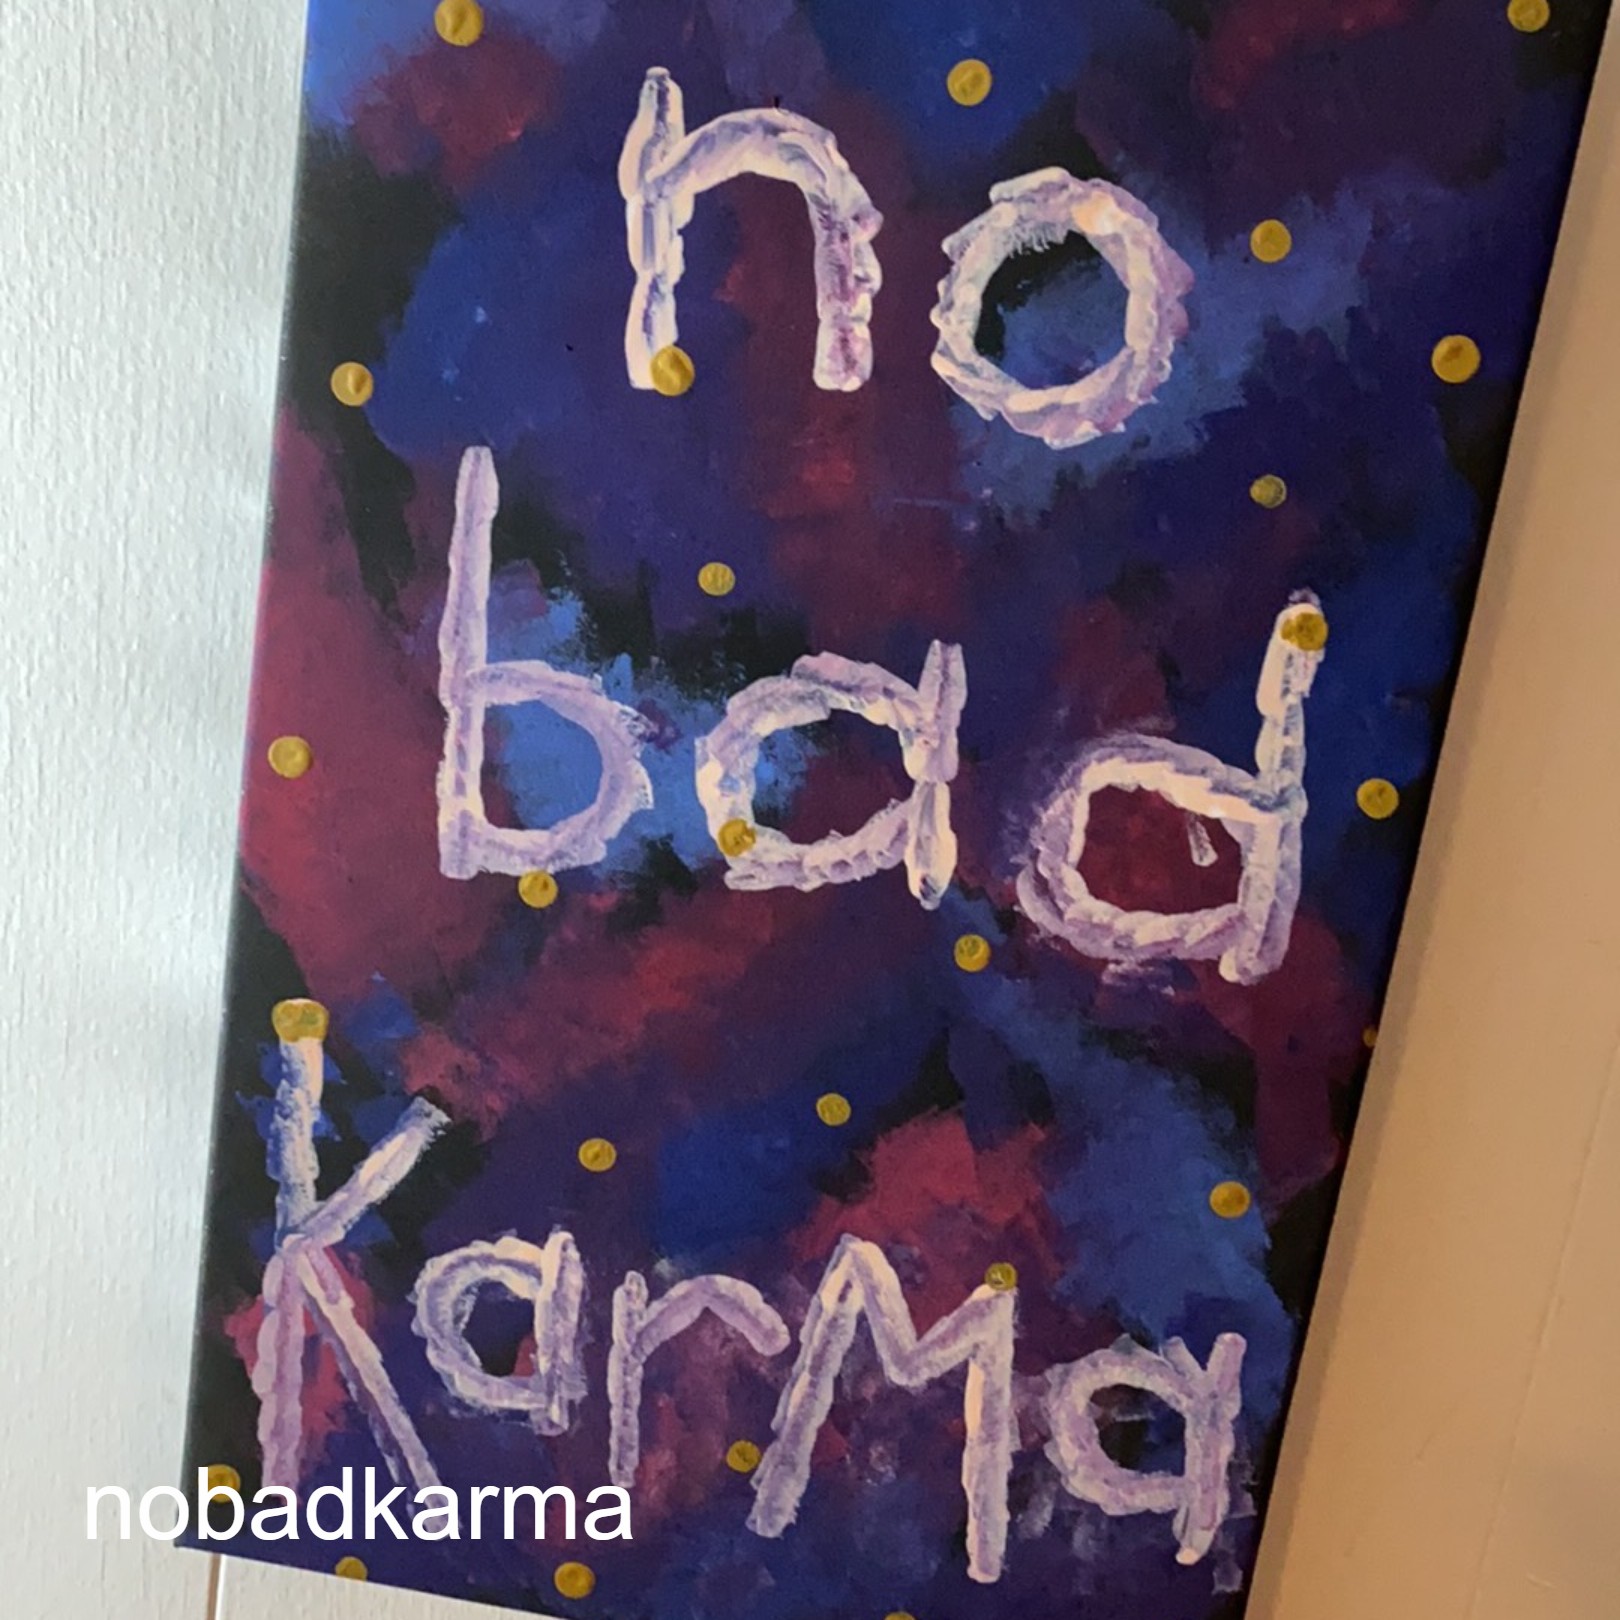 no bad karma: live and love intentionally